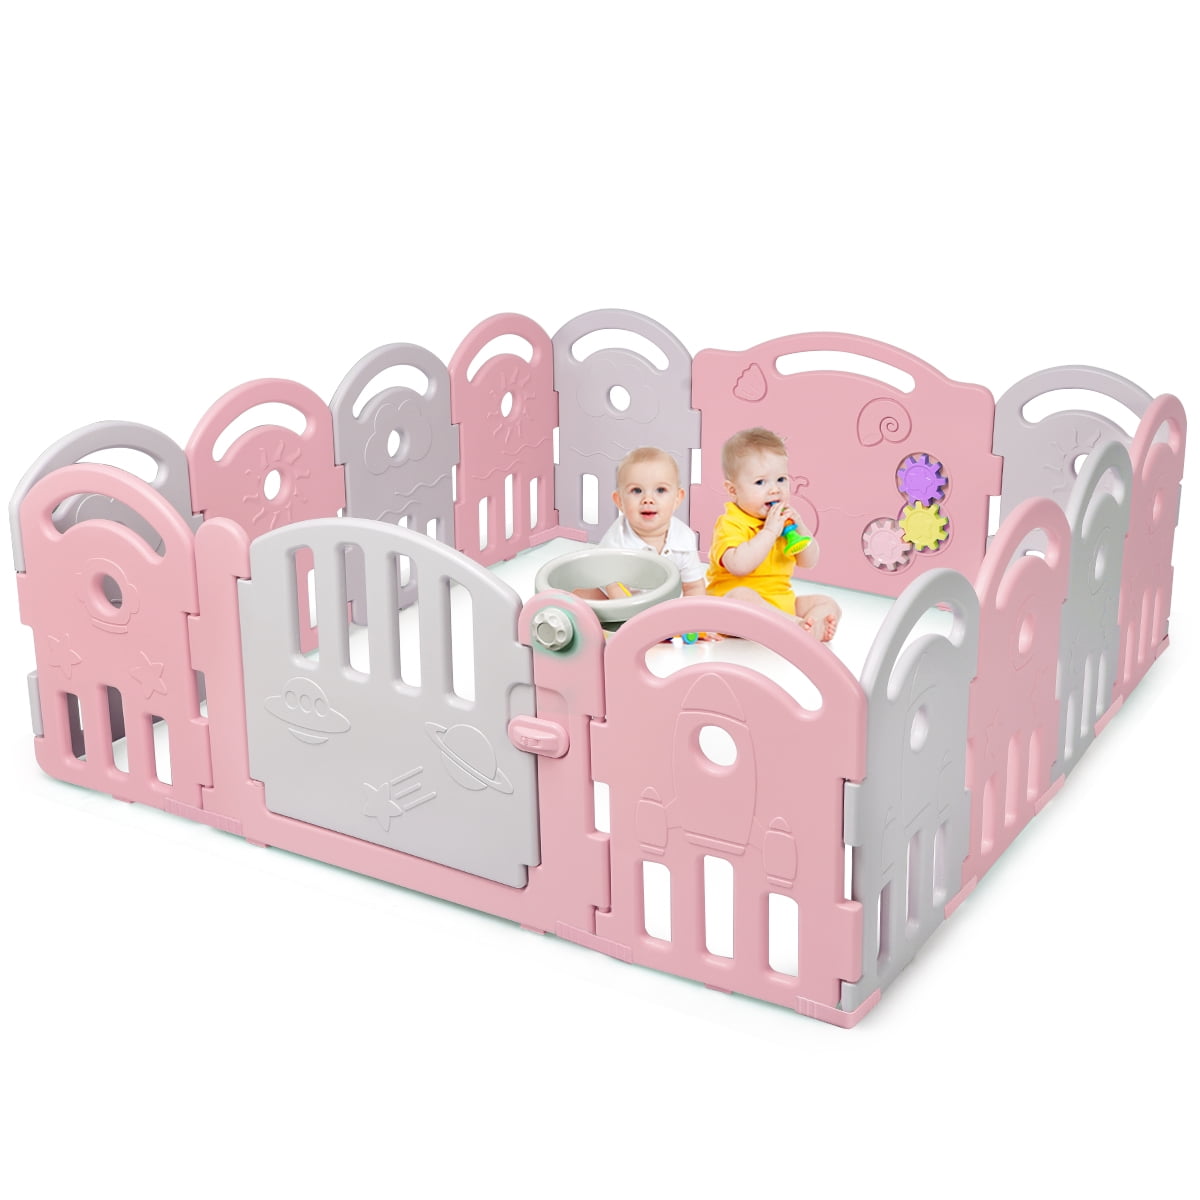 LOVE_BABY Lovebaby Playpen Toddler Play Yard 8 Panel with Door Orange Baby Kids Safety Activity Center 128x128x66cm